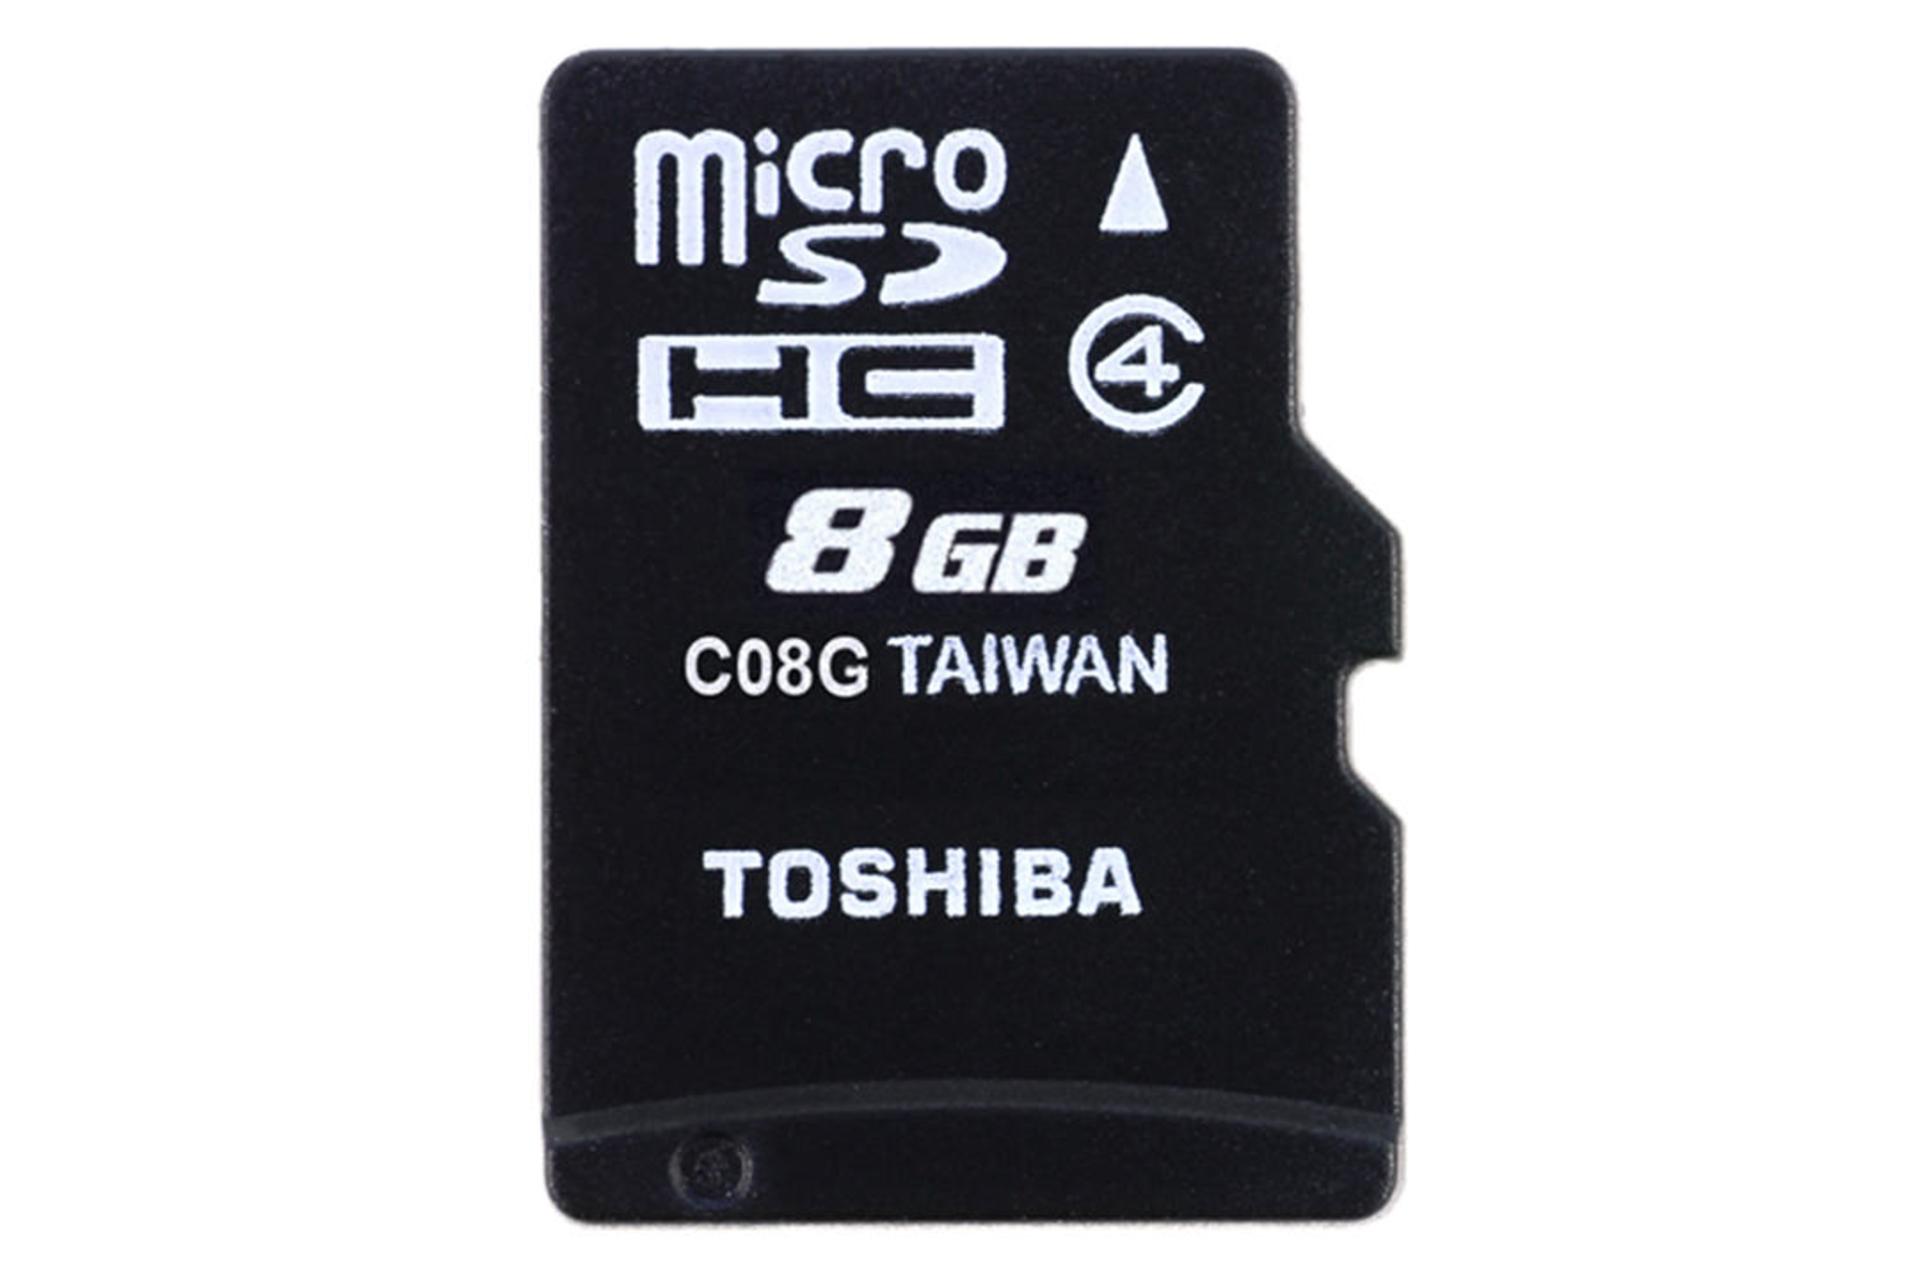 Toshiba C08G microSDHC Class 4 